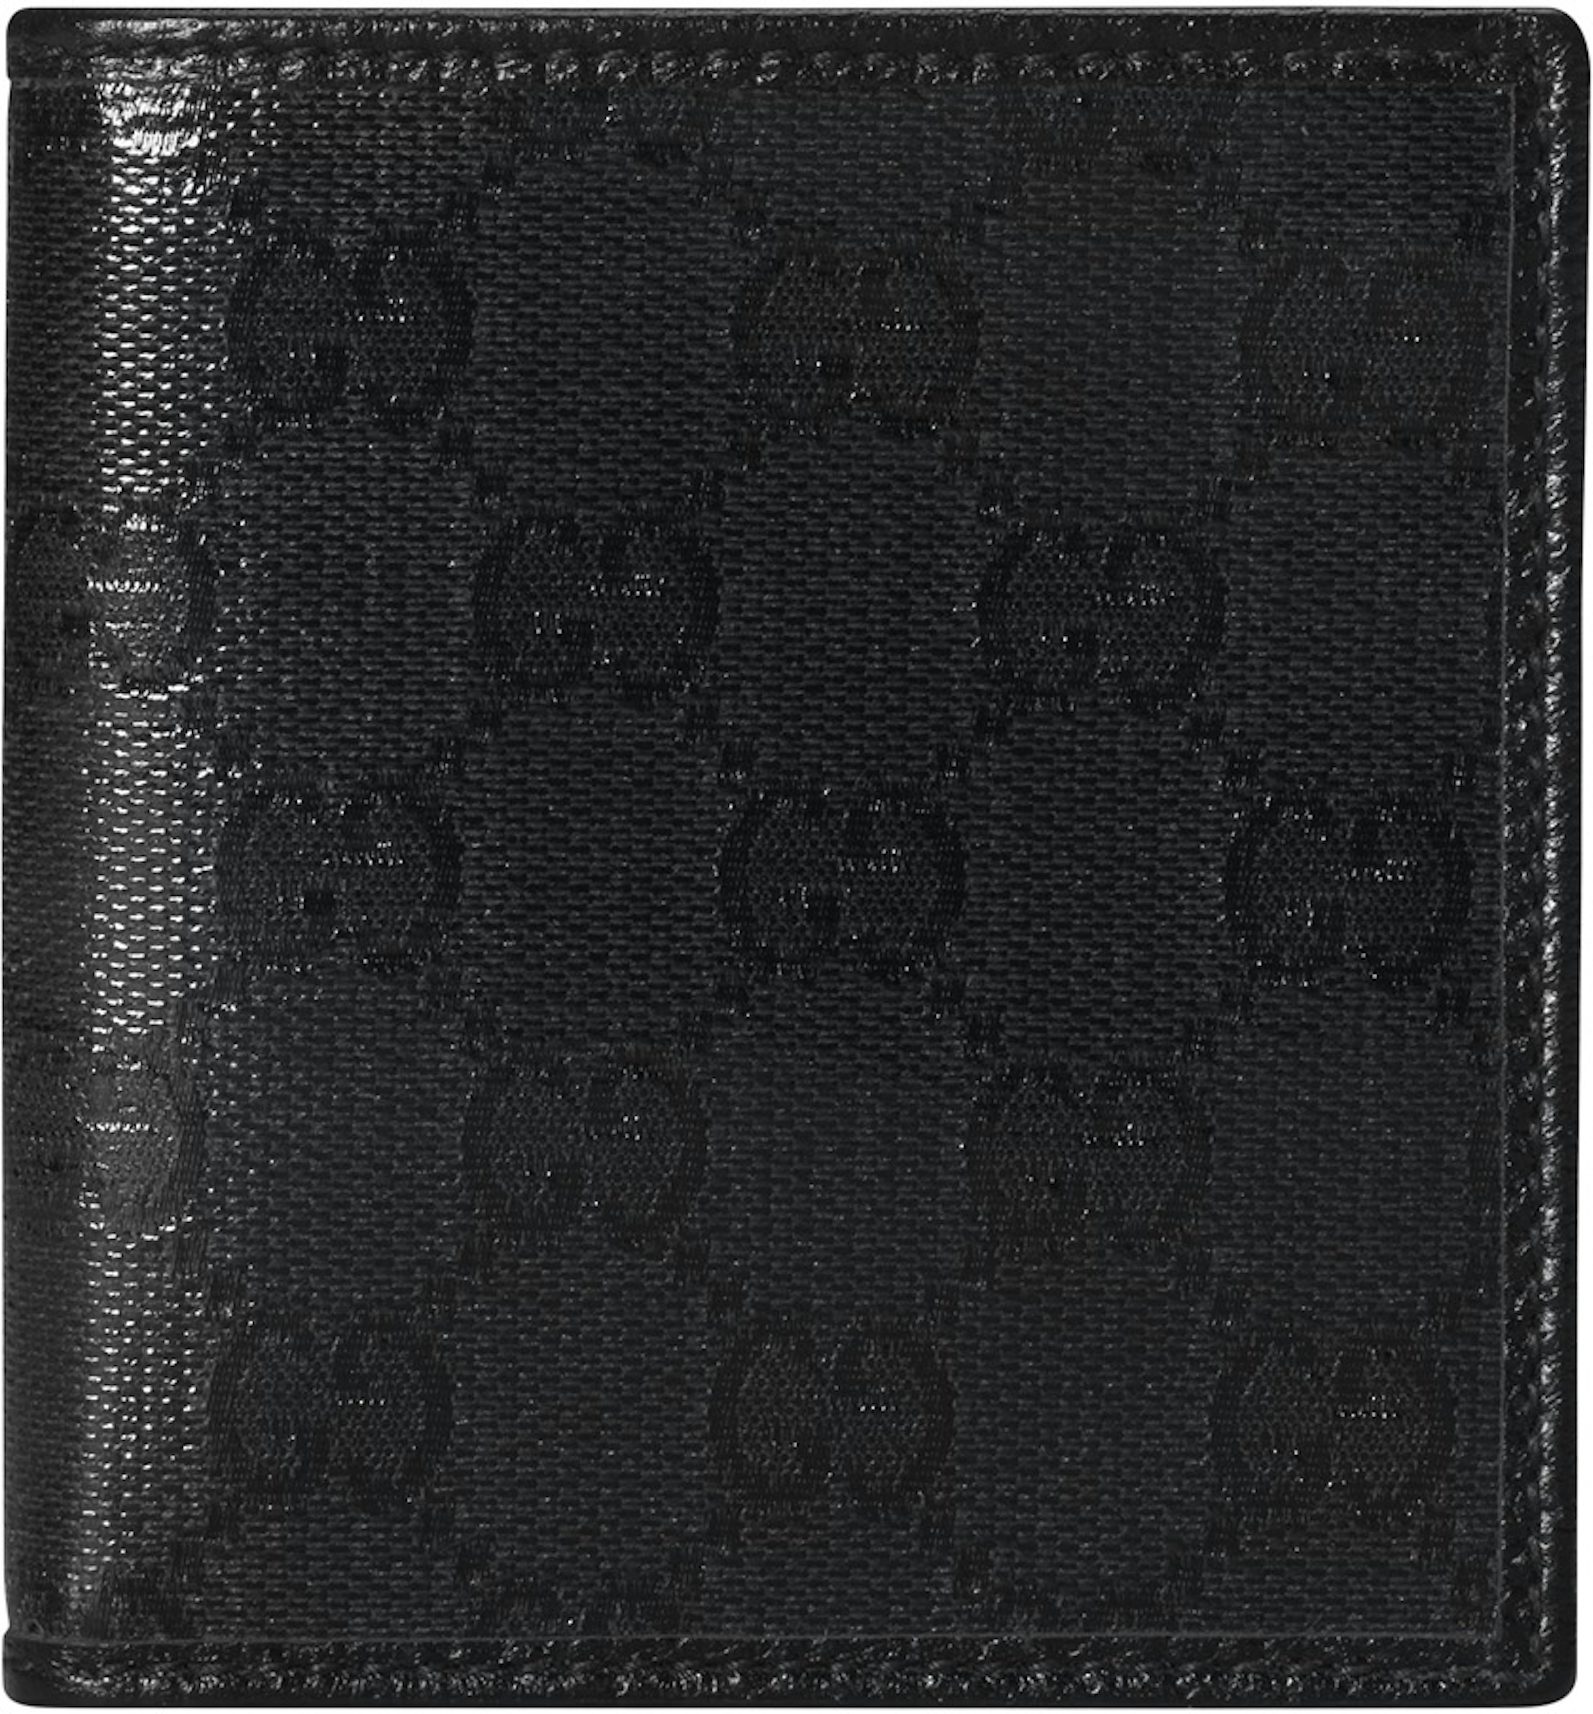 Jumbo GG wallet in black canvas